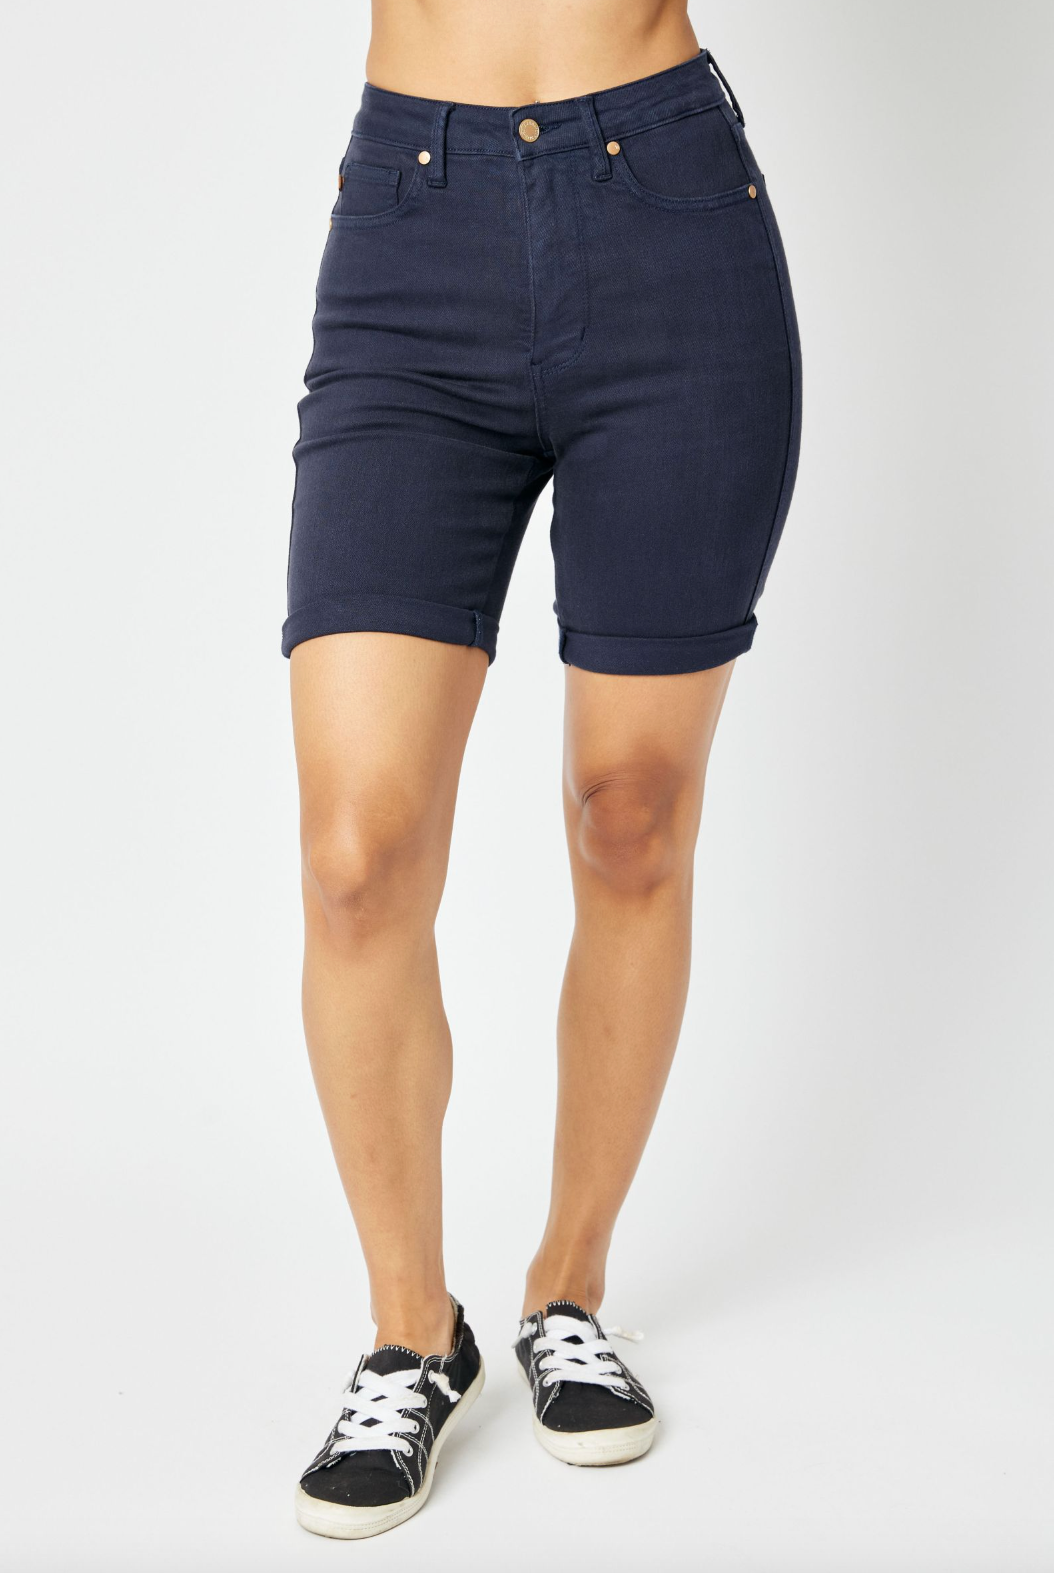 Judy Blue High Waist Garment Dyed Tummy Control Bermuda Shorts | Stuffology Boutique-Shorts-Judy Blue-Stuffology - Where Vintage Meets Modern, A Boutique for Real Women in Crosbyton, TX